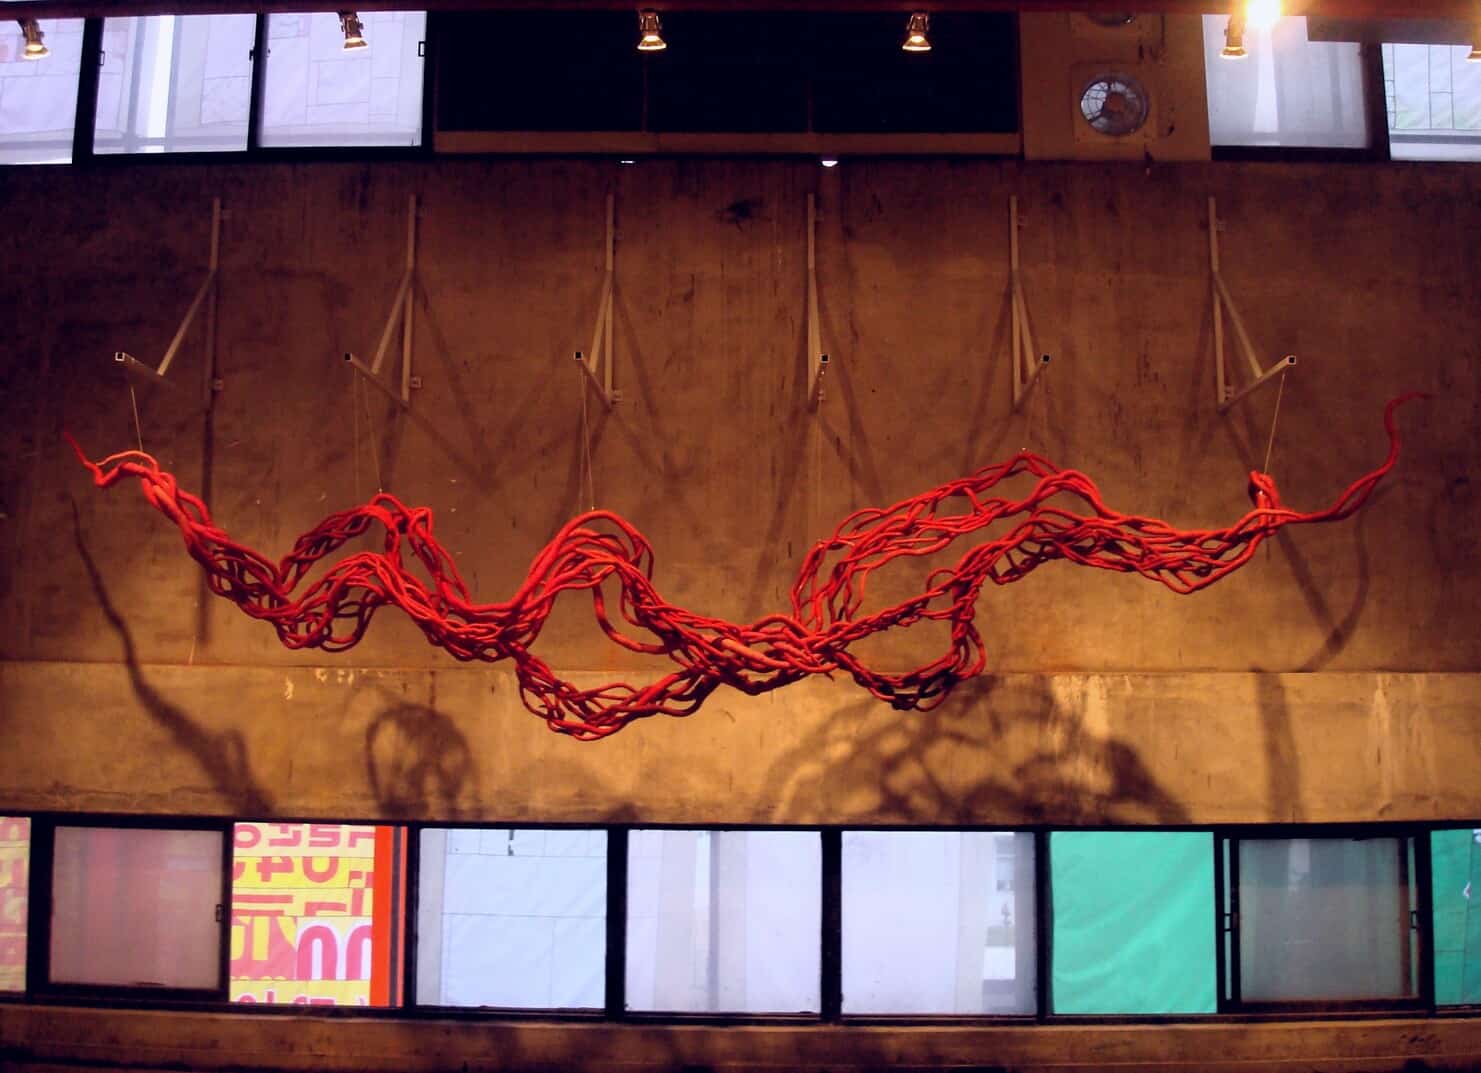 Aude Franjou giant red sculpture at Cheongju International Craft biennale, Korea